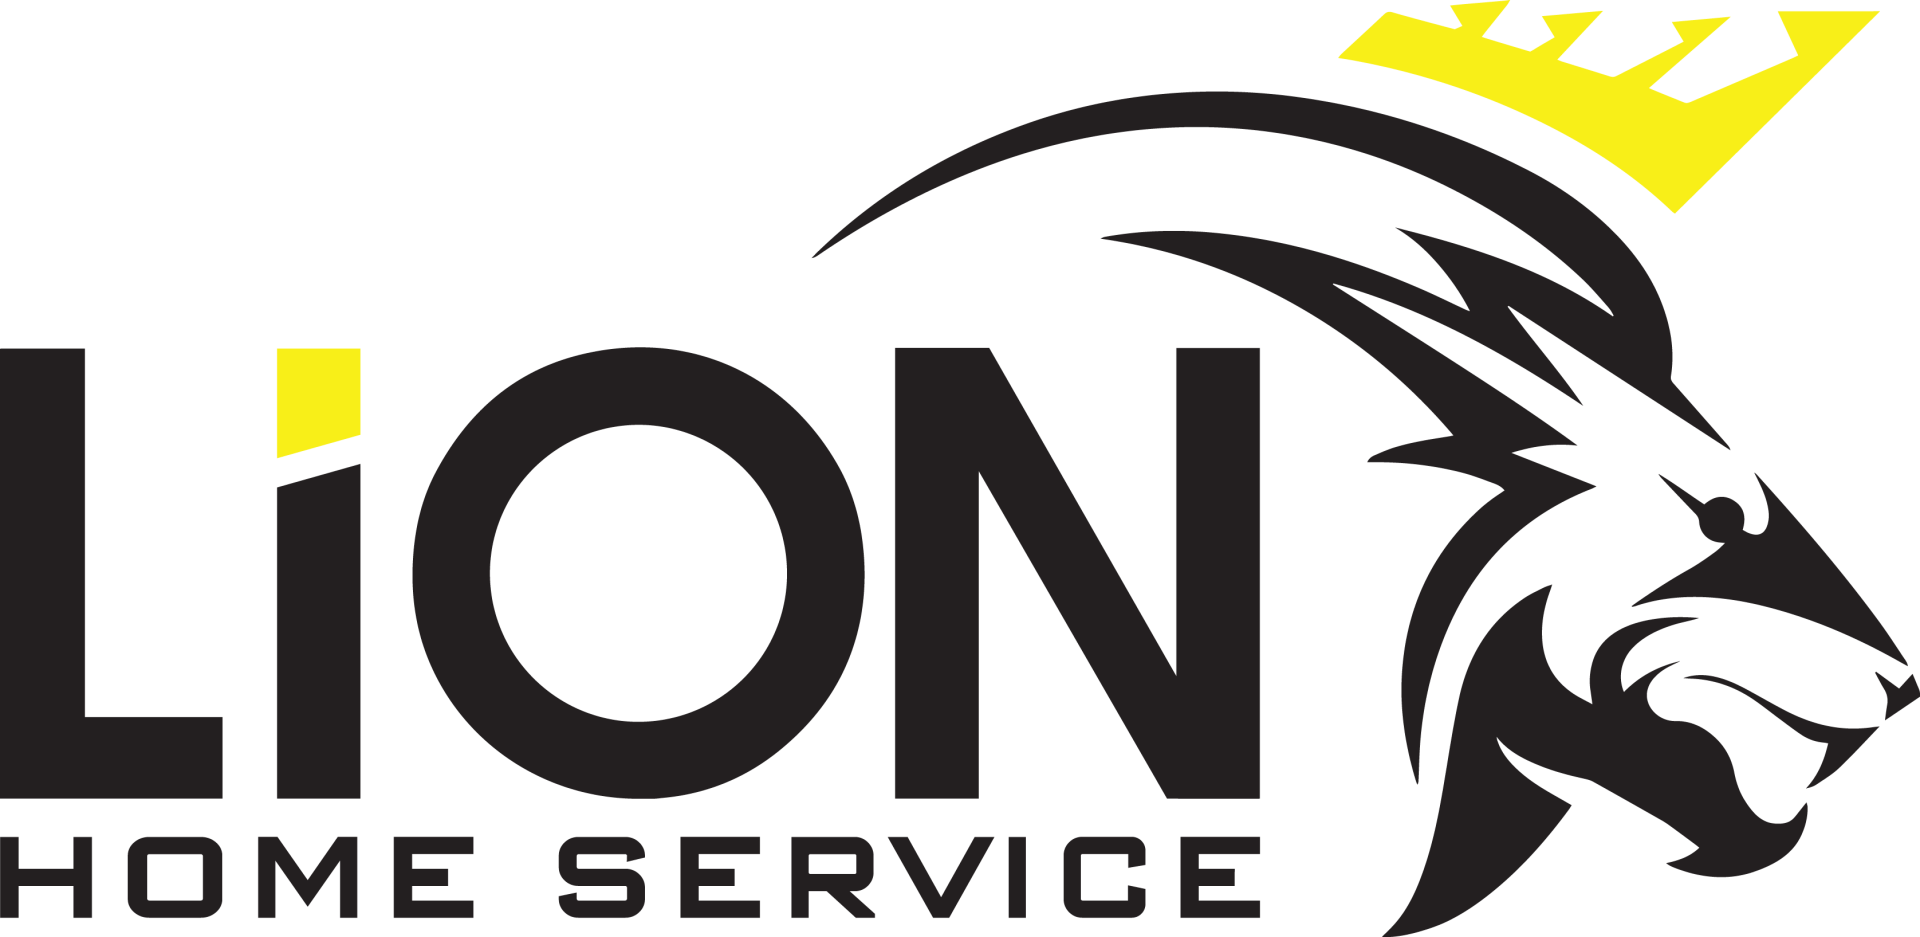 Lion Home Service logo